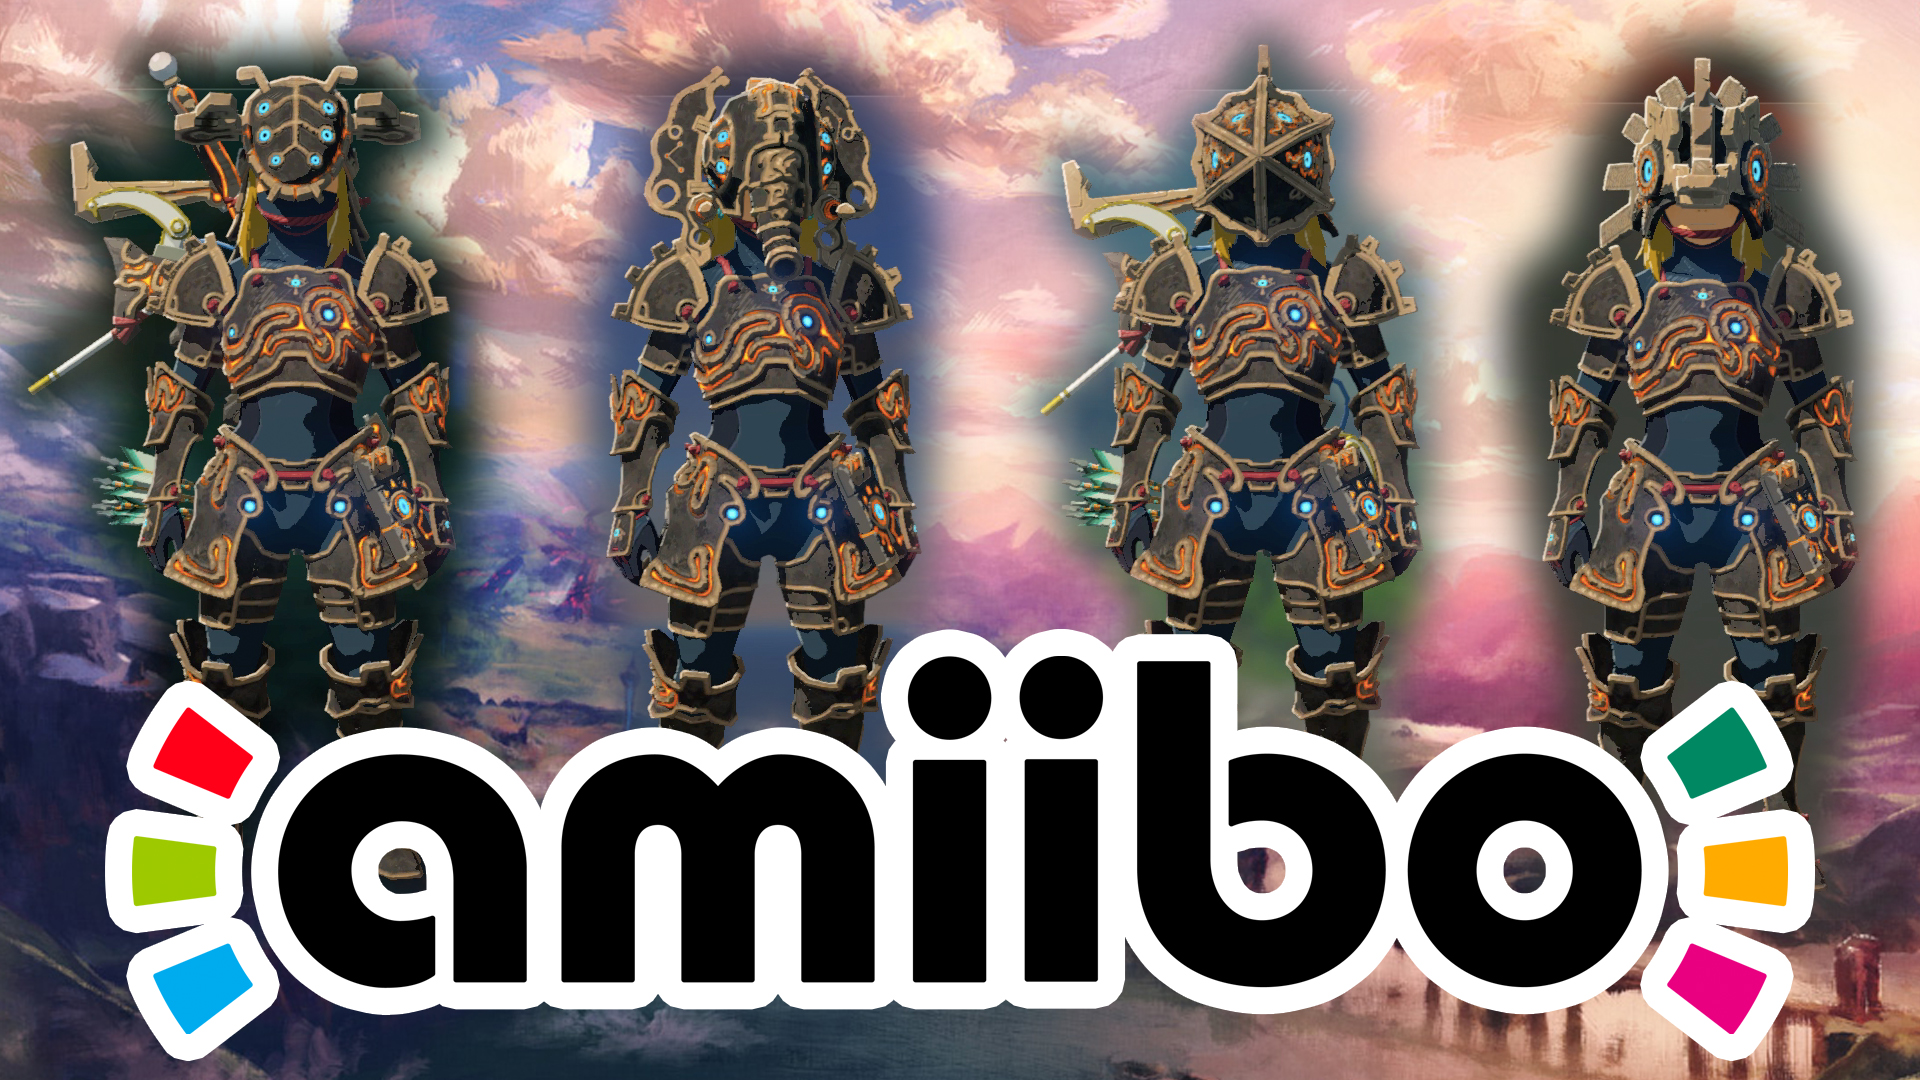 Zelda: Breath of the Wild Champion amiibo Functions and Gameplay | Mon Amiibo.com